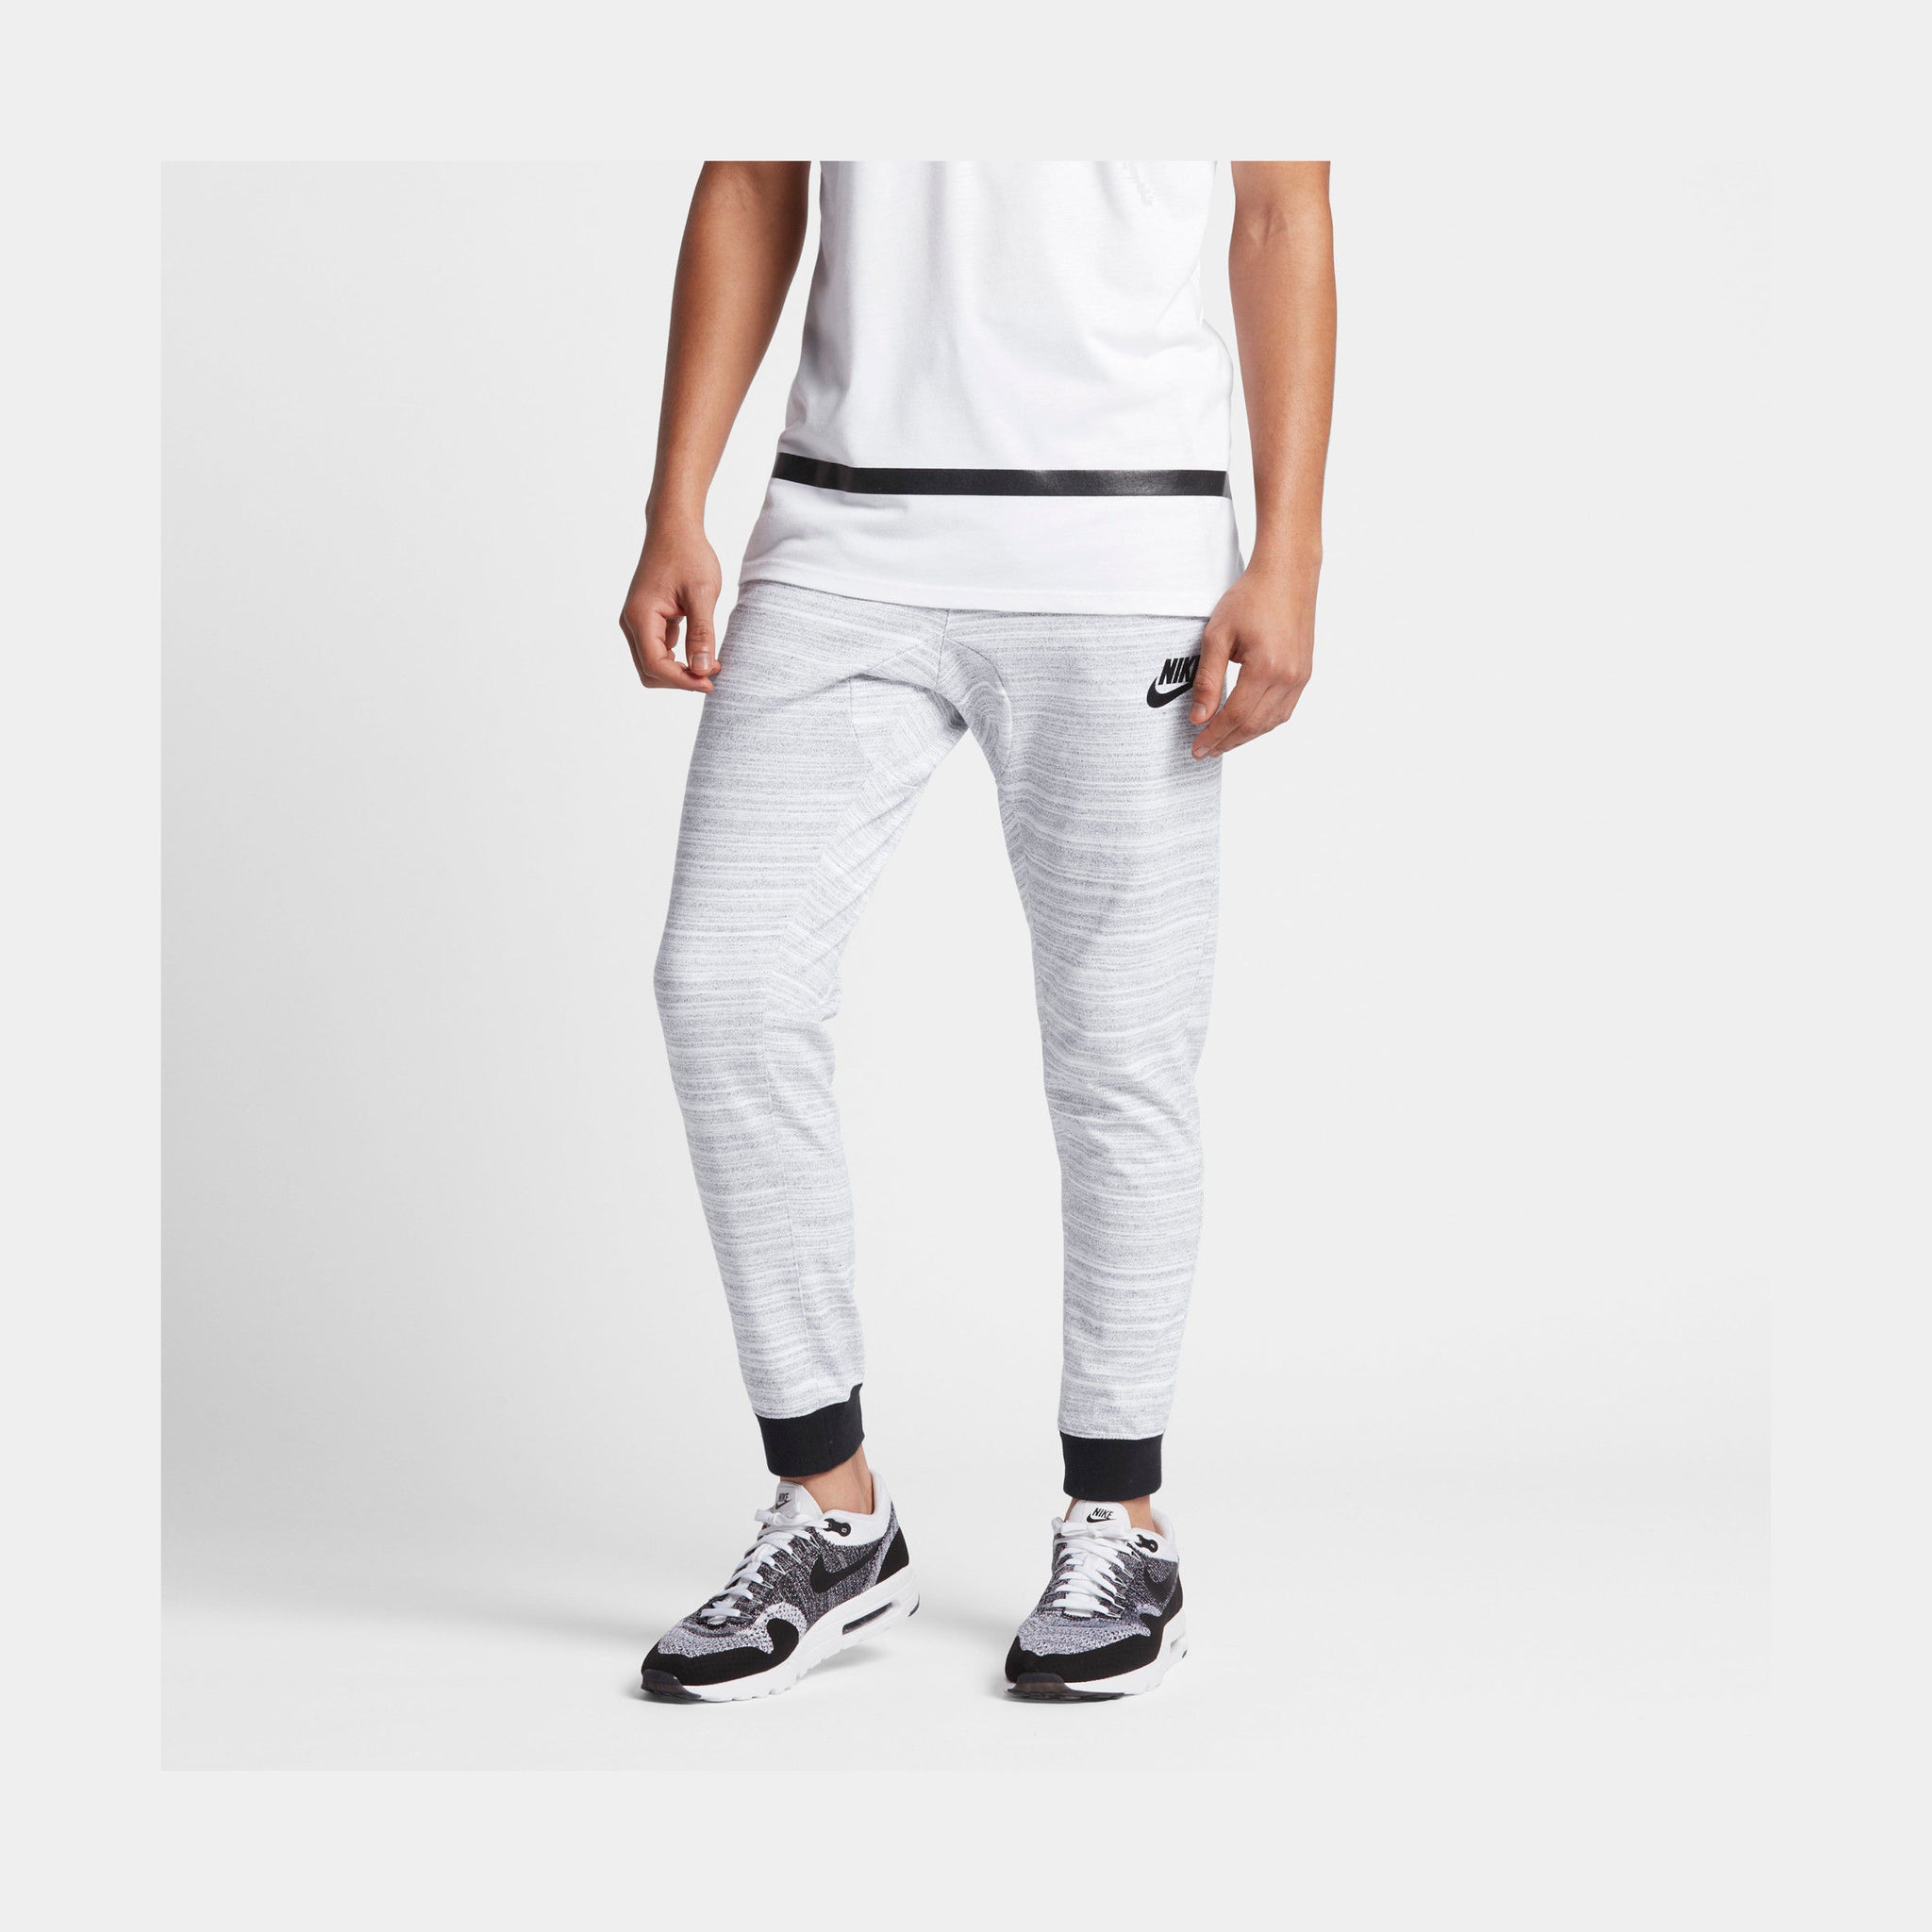 Nike Advance 15 Knit Jogger Pants Grey 837012-100 Shoe Palace